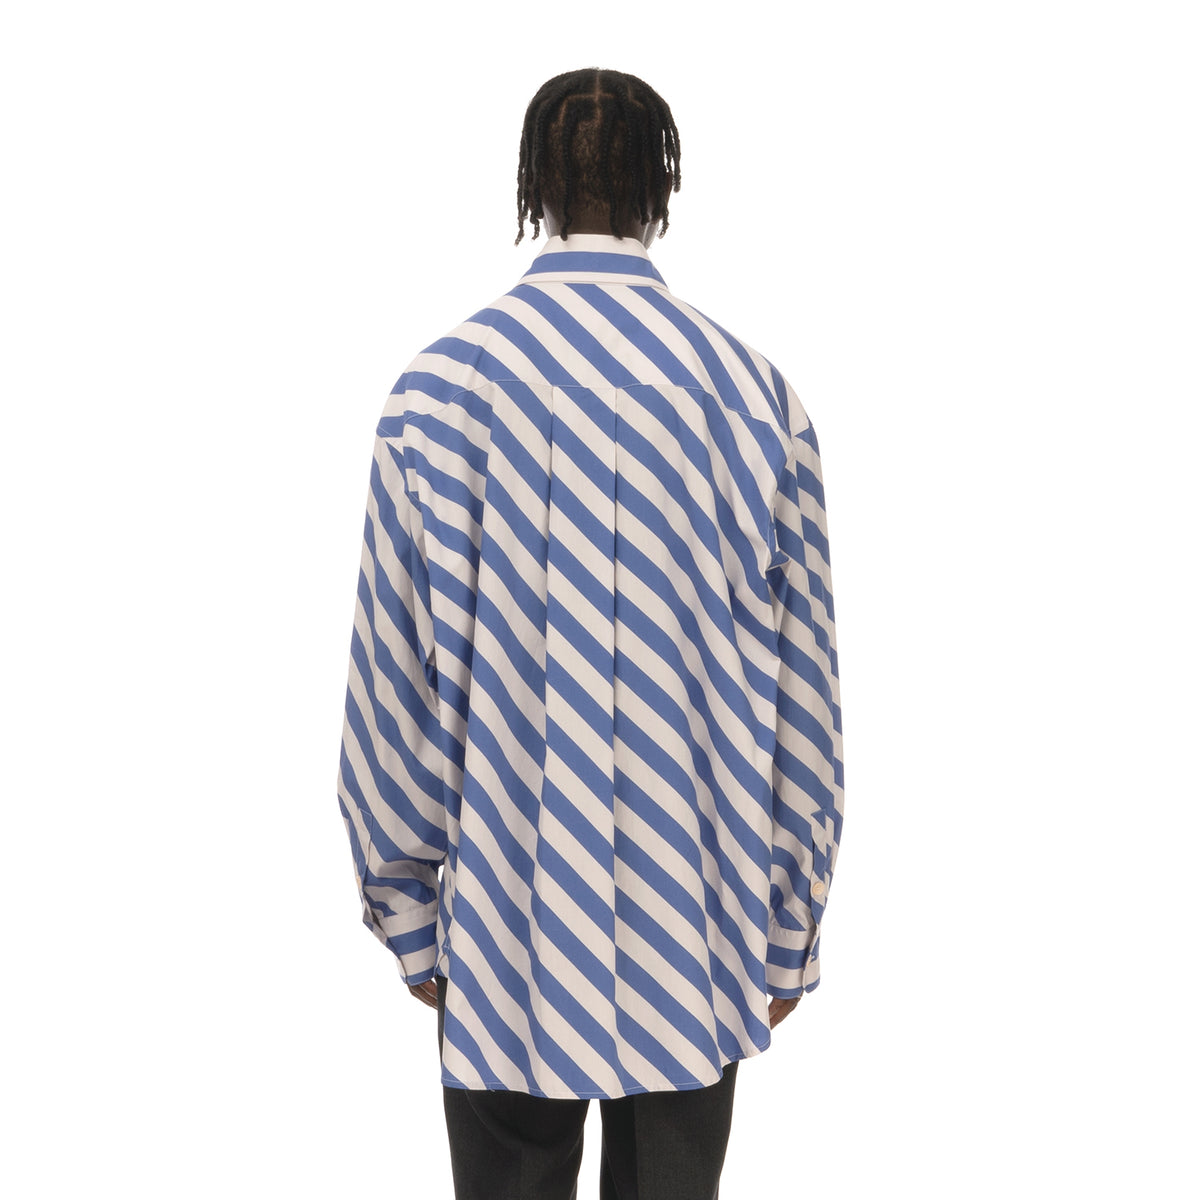 Marni | Shirt White / Blue Stripe - Concrete